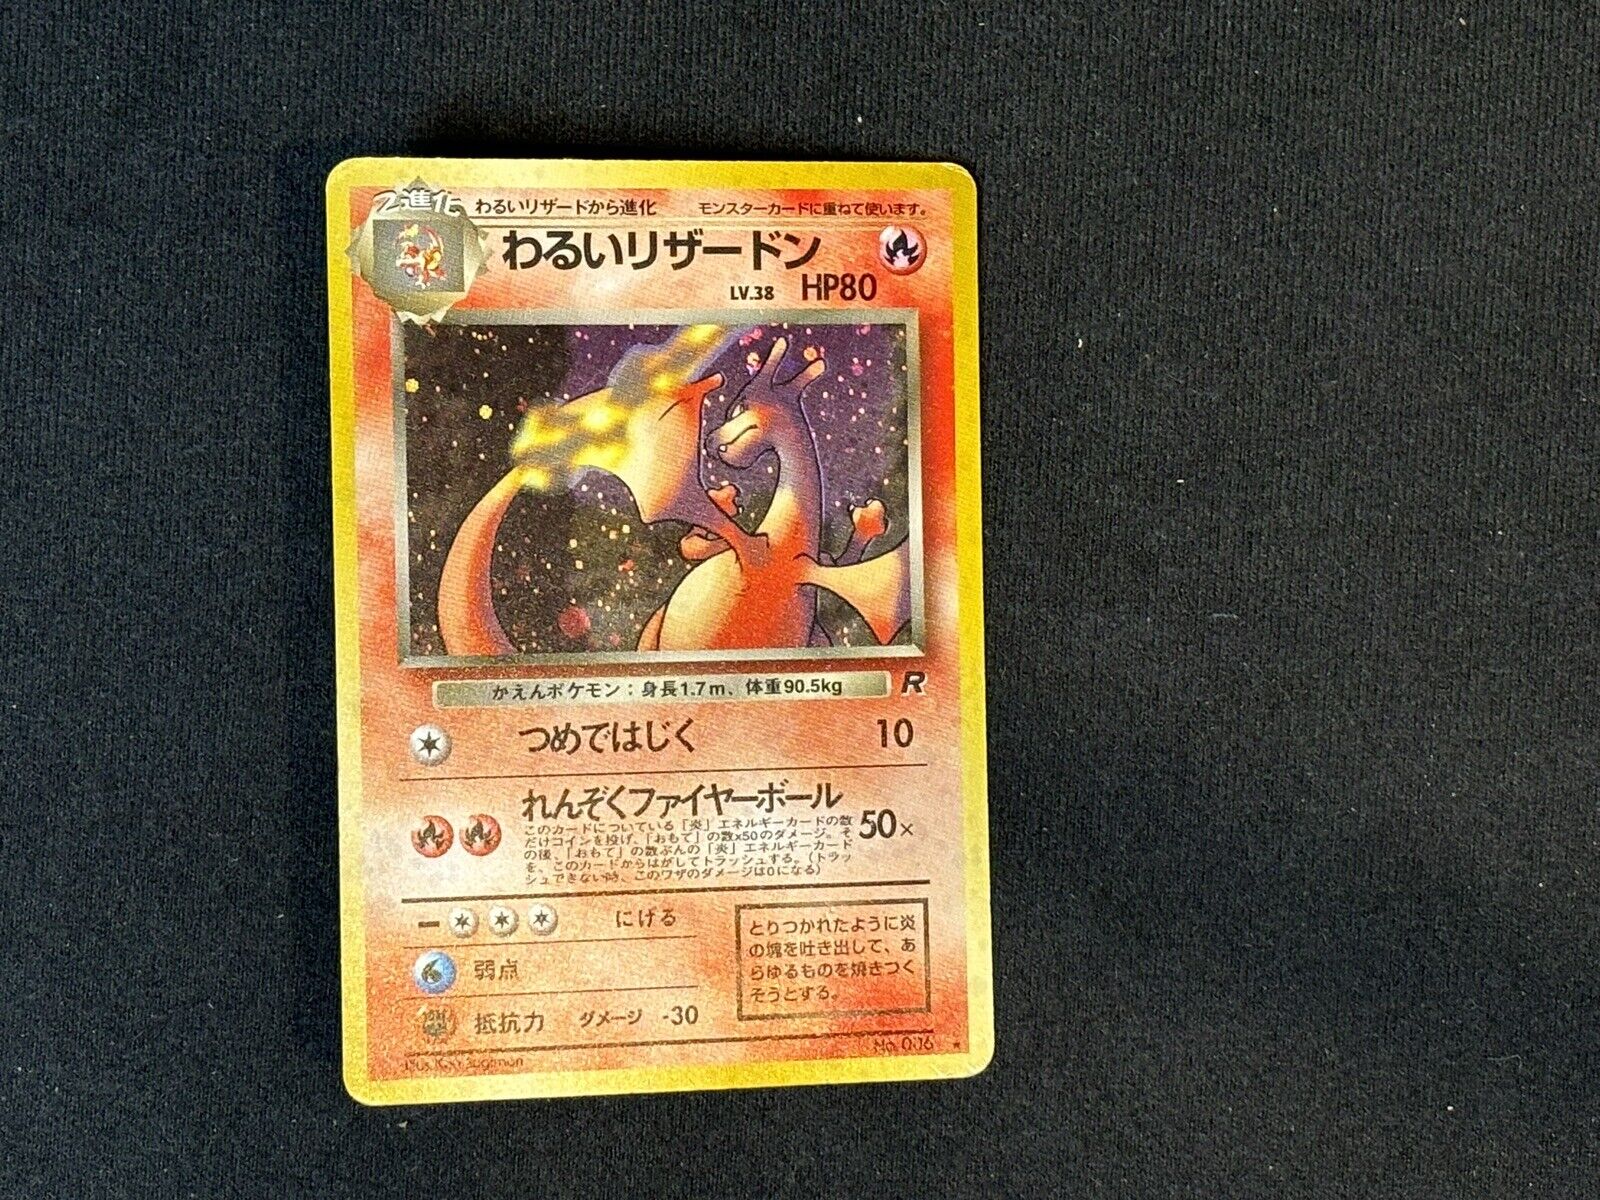 Dark Charizard Holo Team Rocket Japanese VG, 006 Pokemon Card.